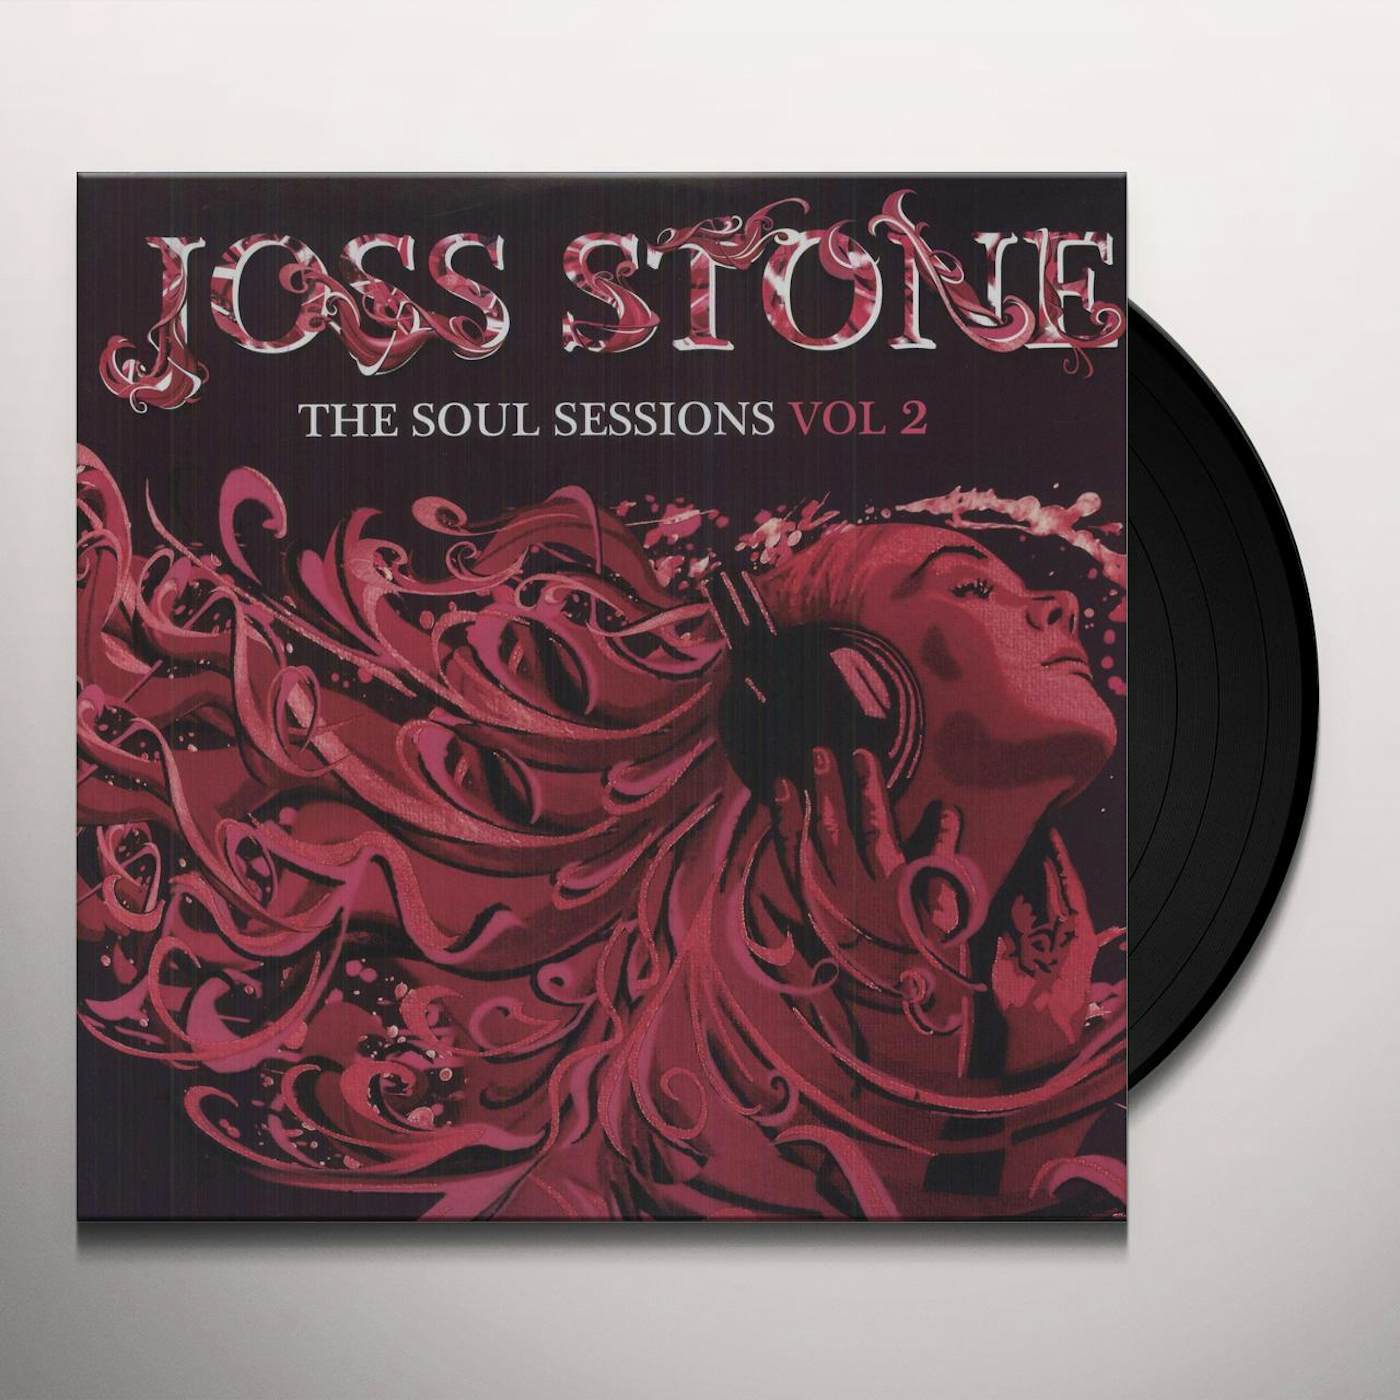 Joss Stone – The Love We Had (Stays On My Mind) 